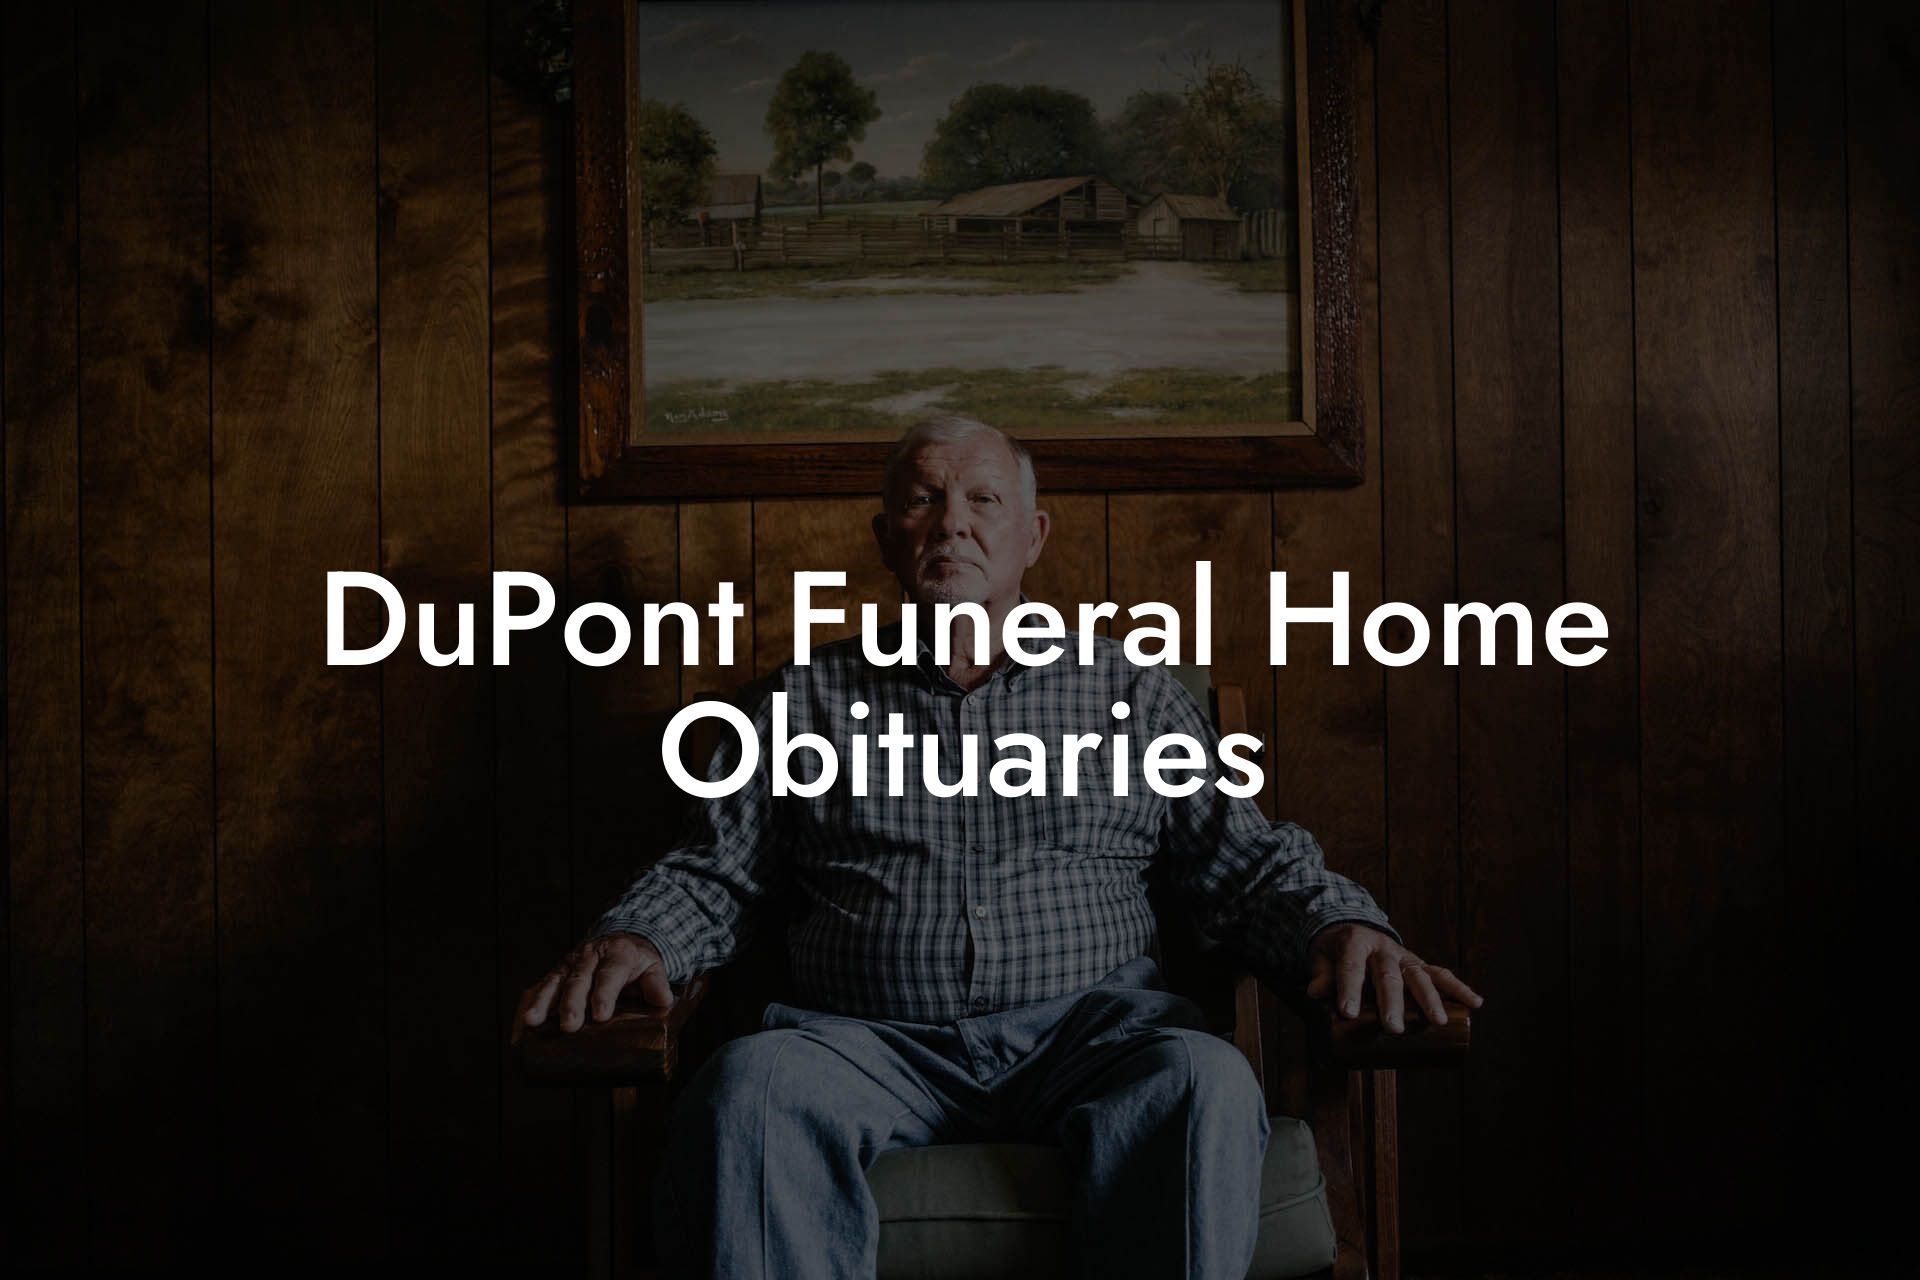 DuPont Funeral Home Obituaries